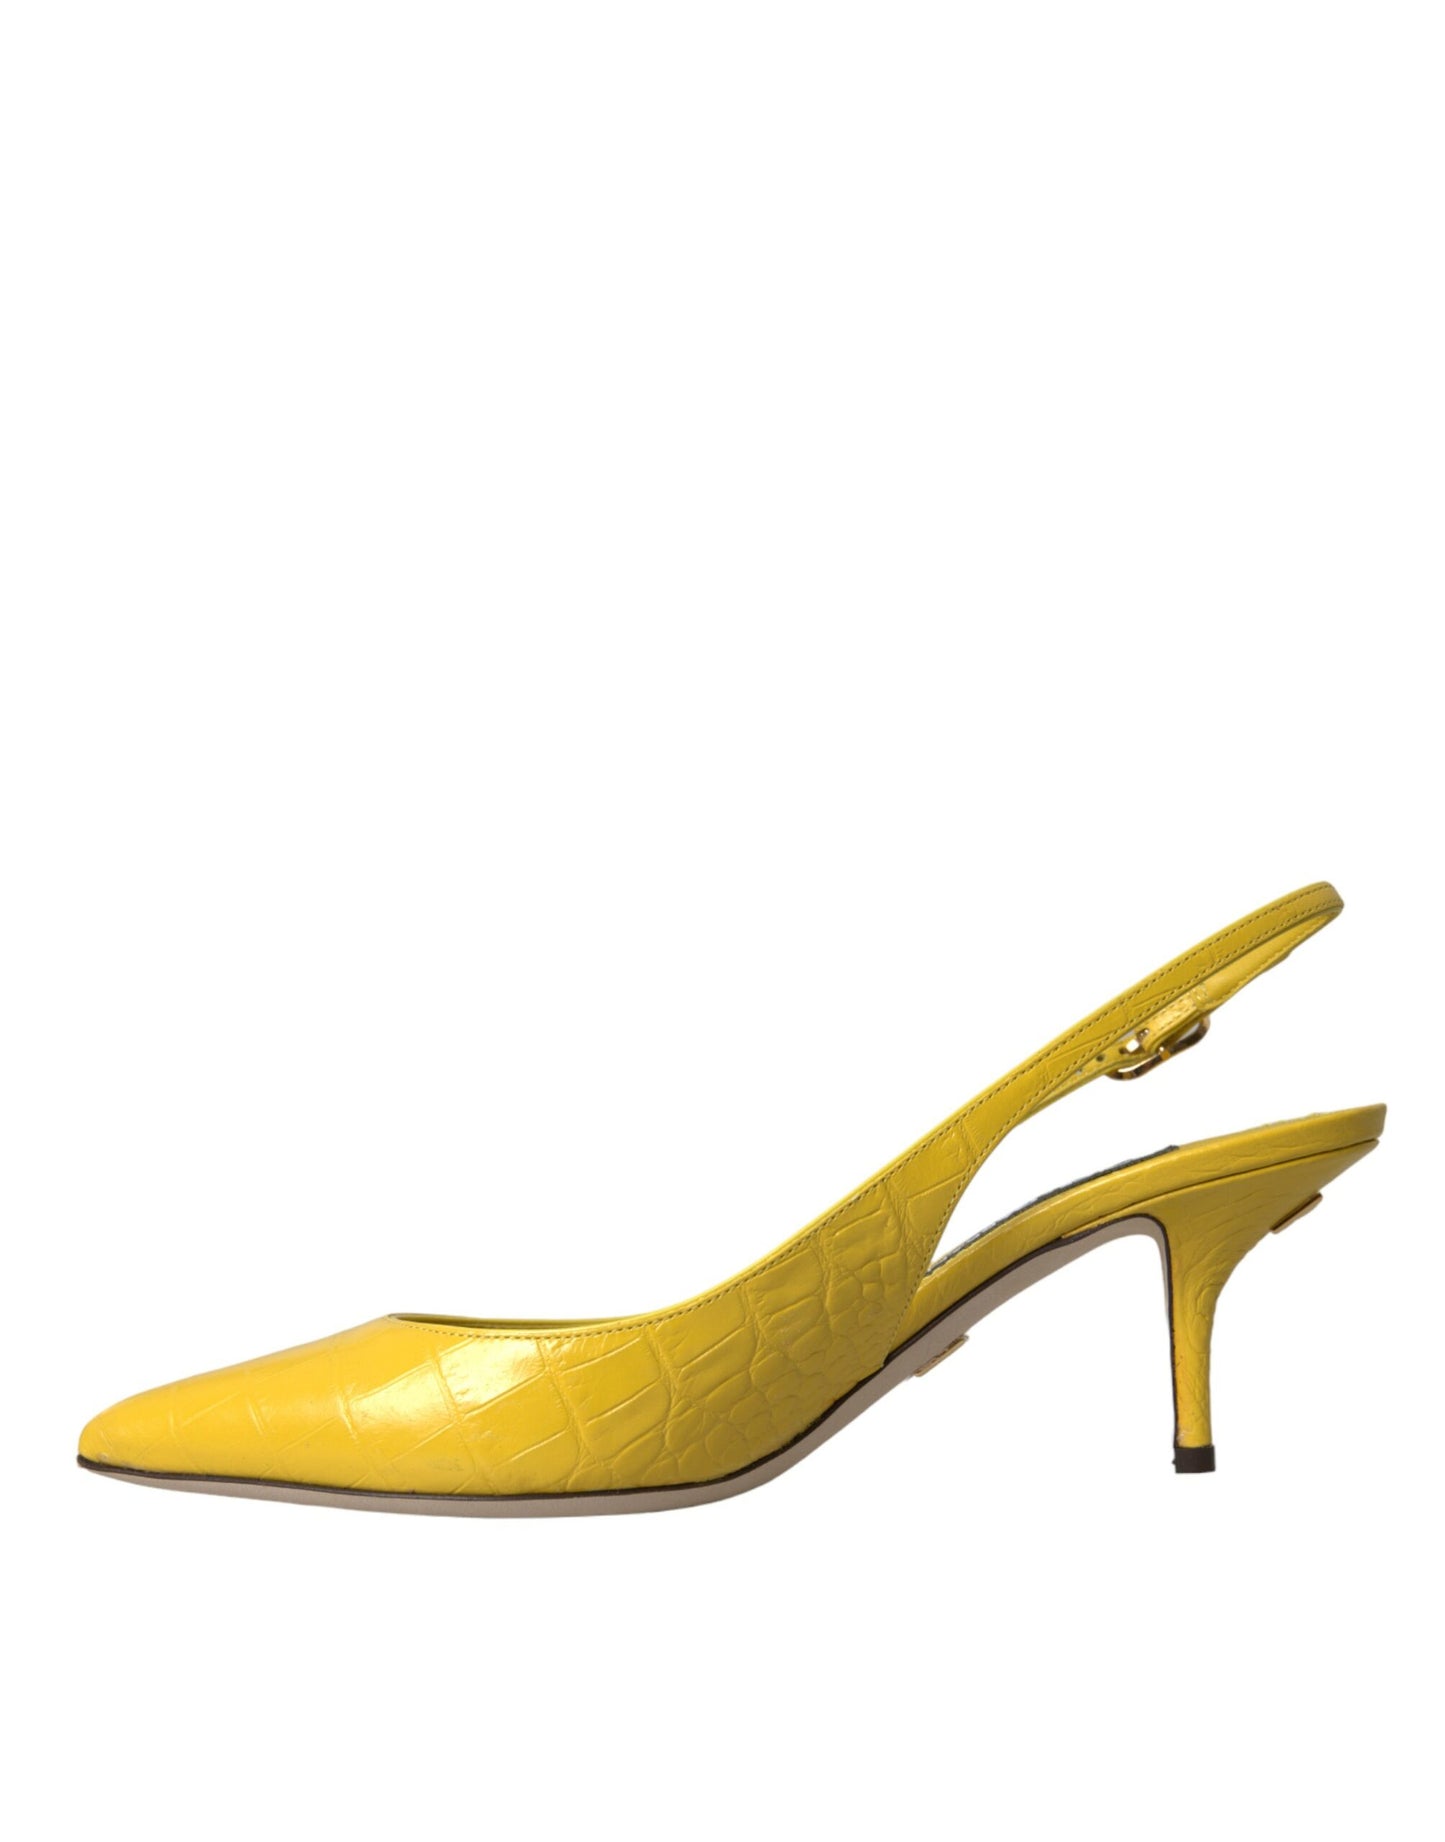 Yellow Leather Slingbacks Heels Shoes